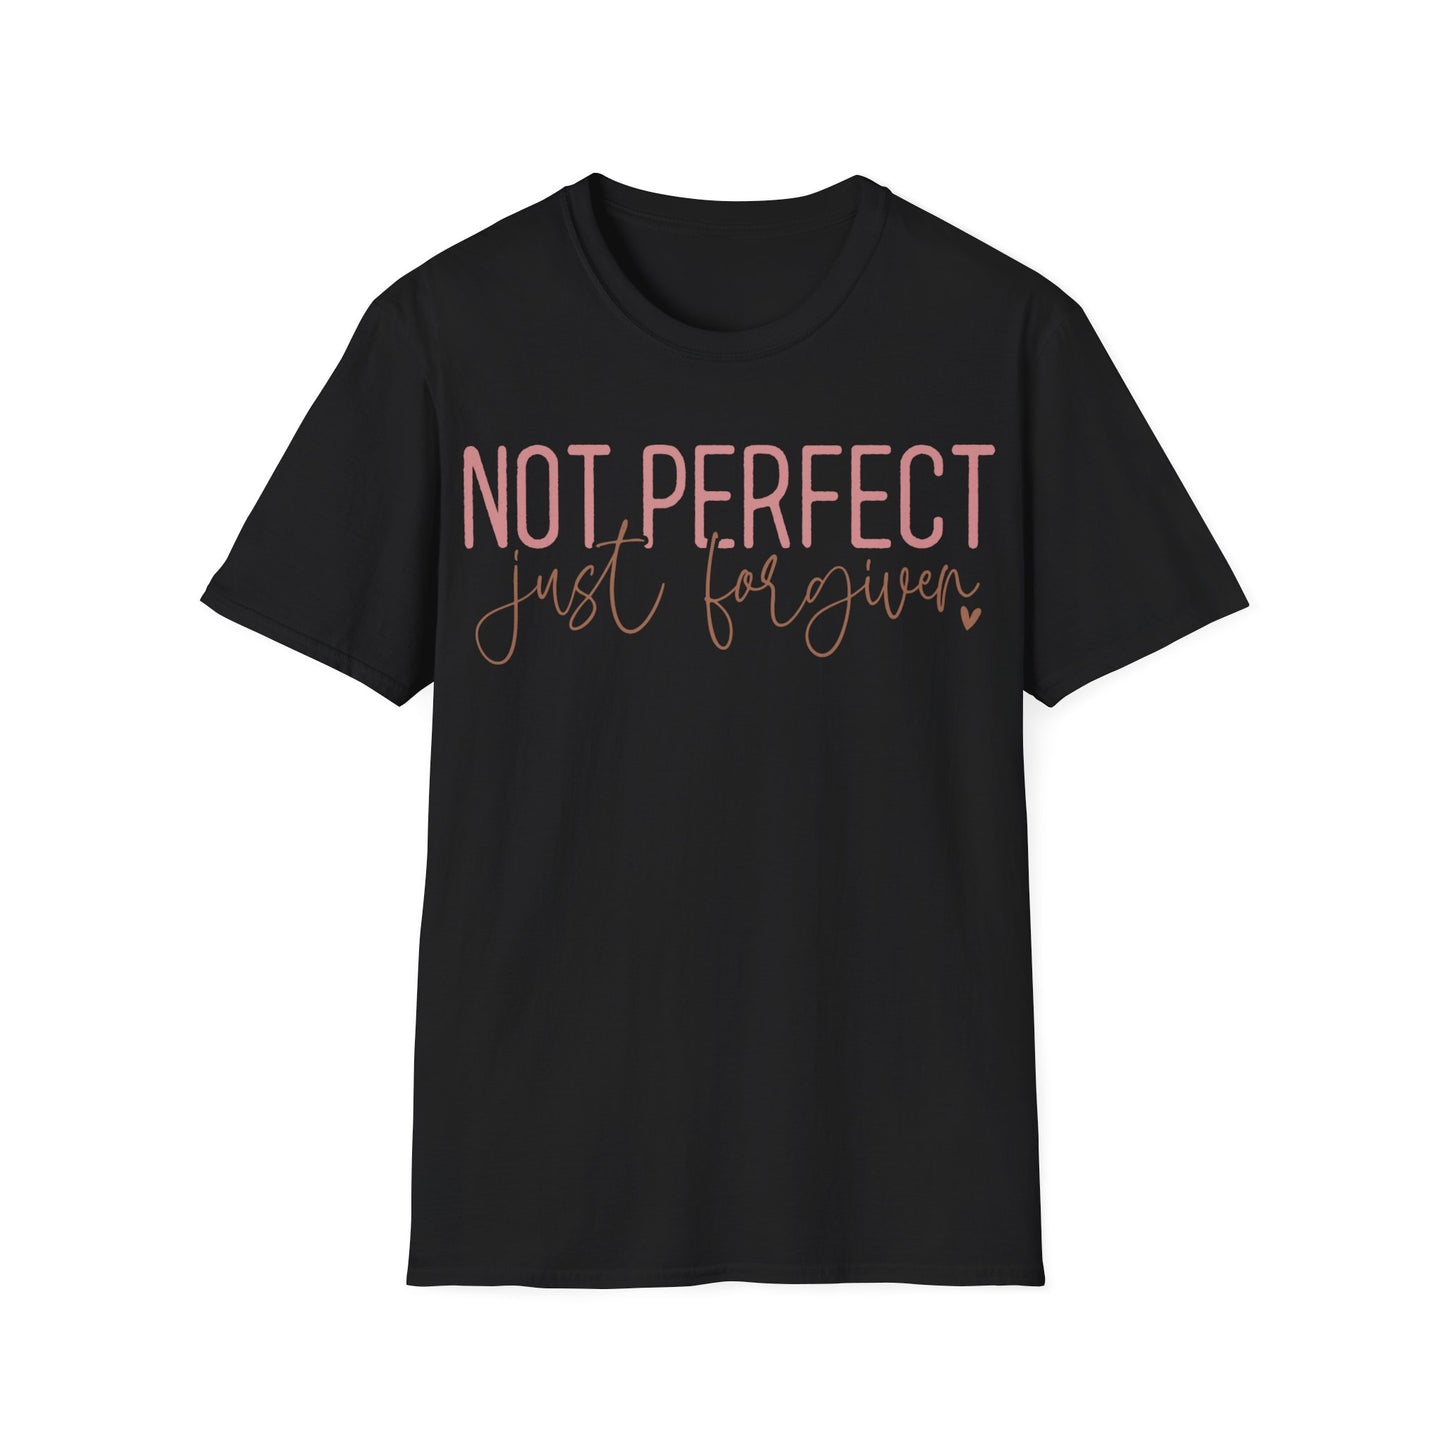 Not Perfect Just Forgiven Christian T-Shirt